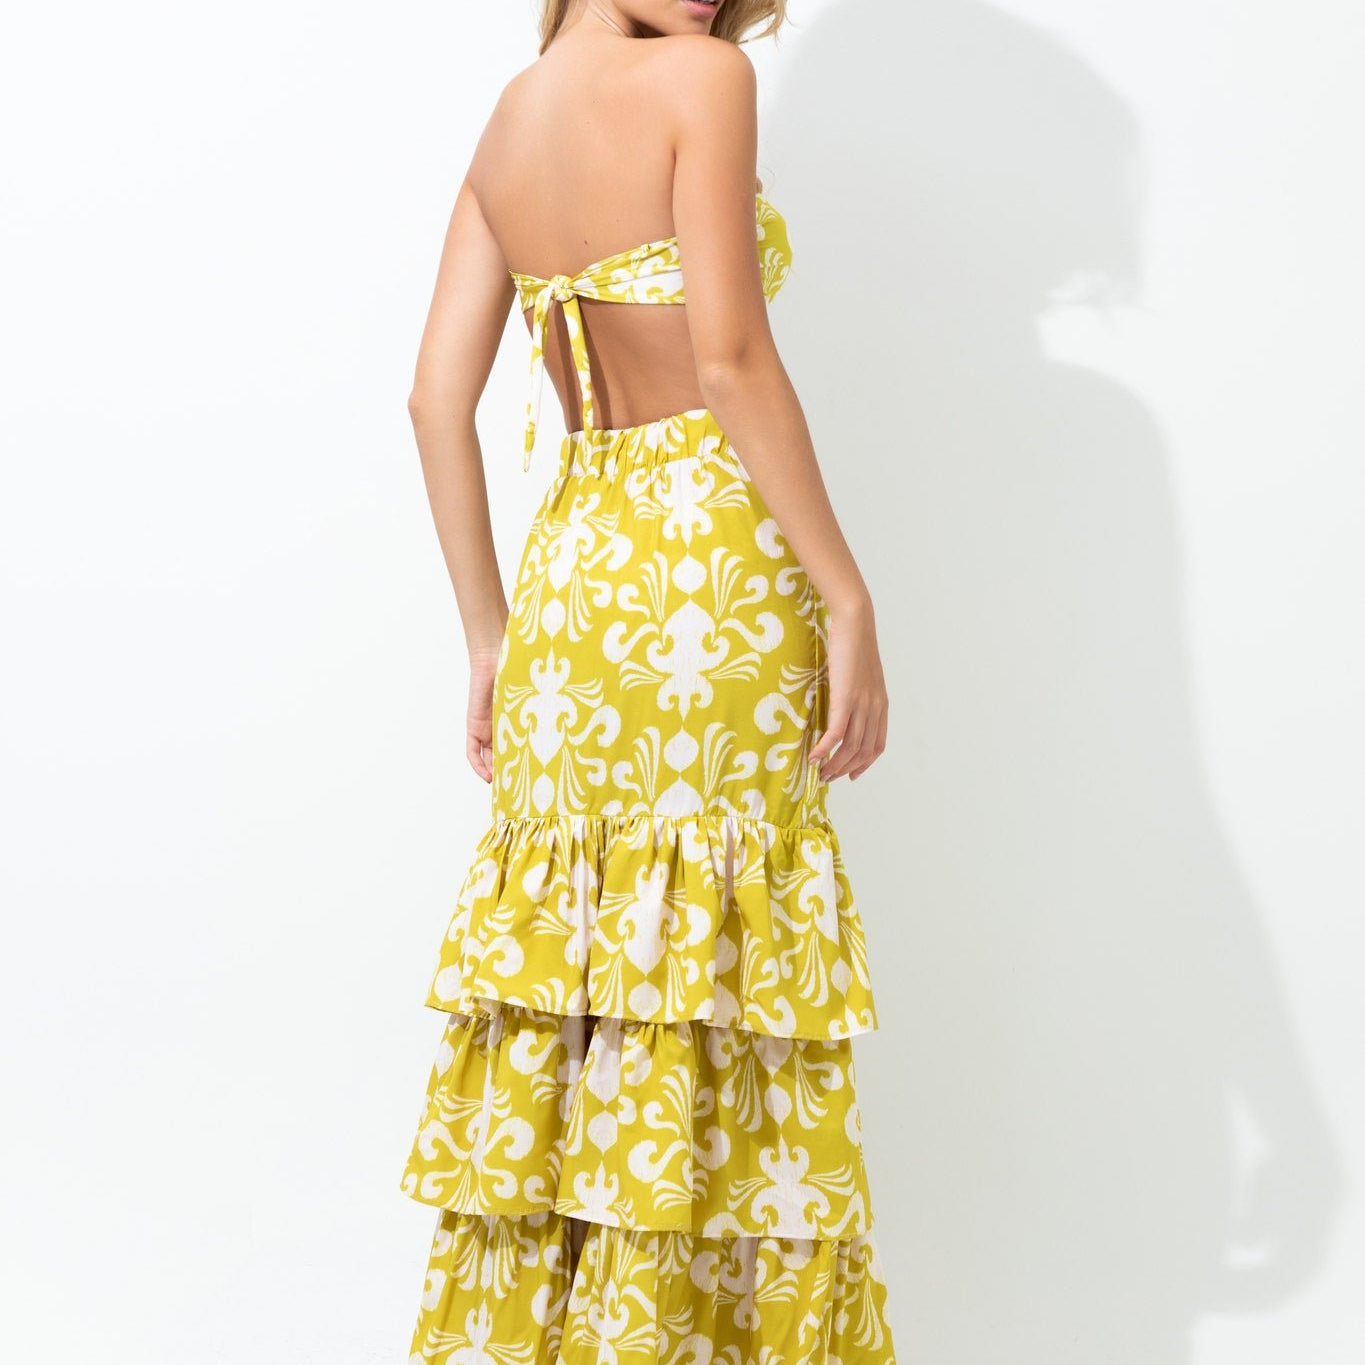 Capri Ruffle Skirt - One Size - EVAMAIA